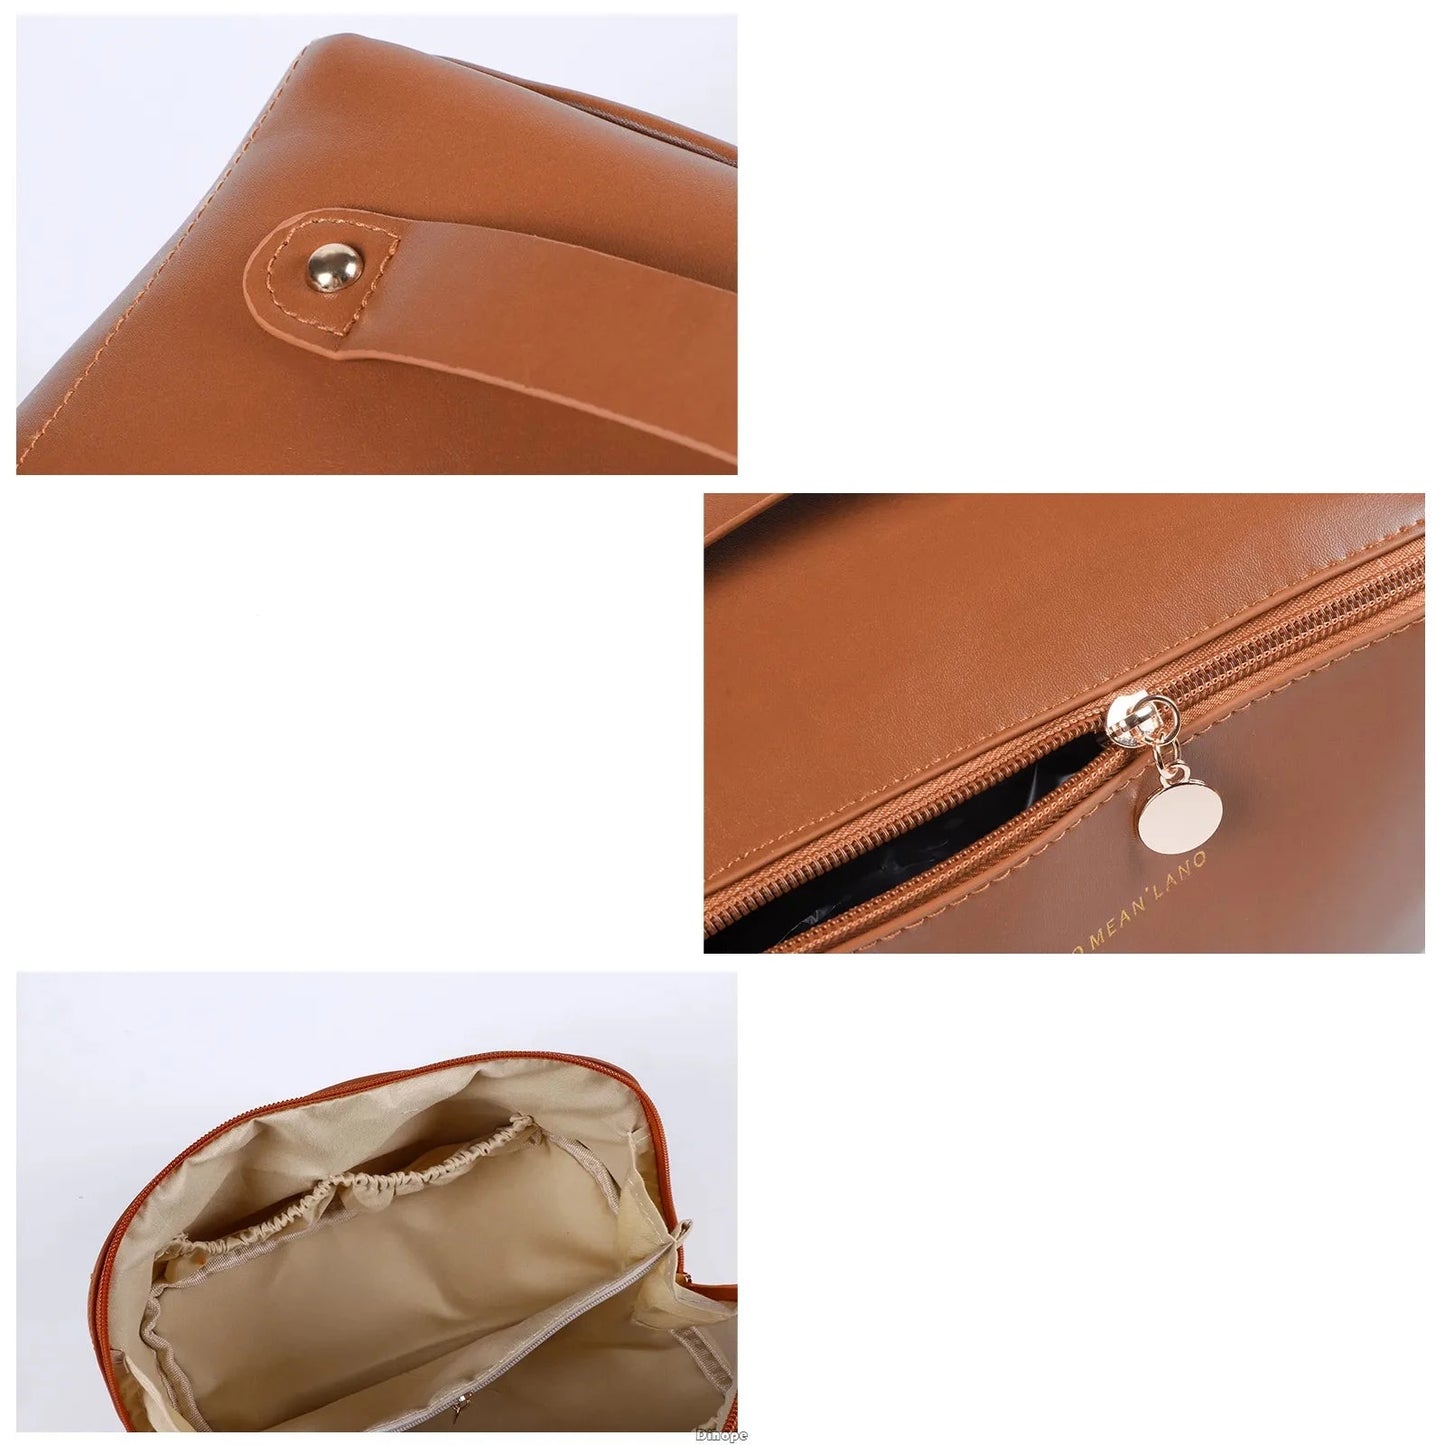 Stylish PU Leather Luxury Cosmetic Bag | Travel Toiletries Organizer